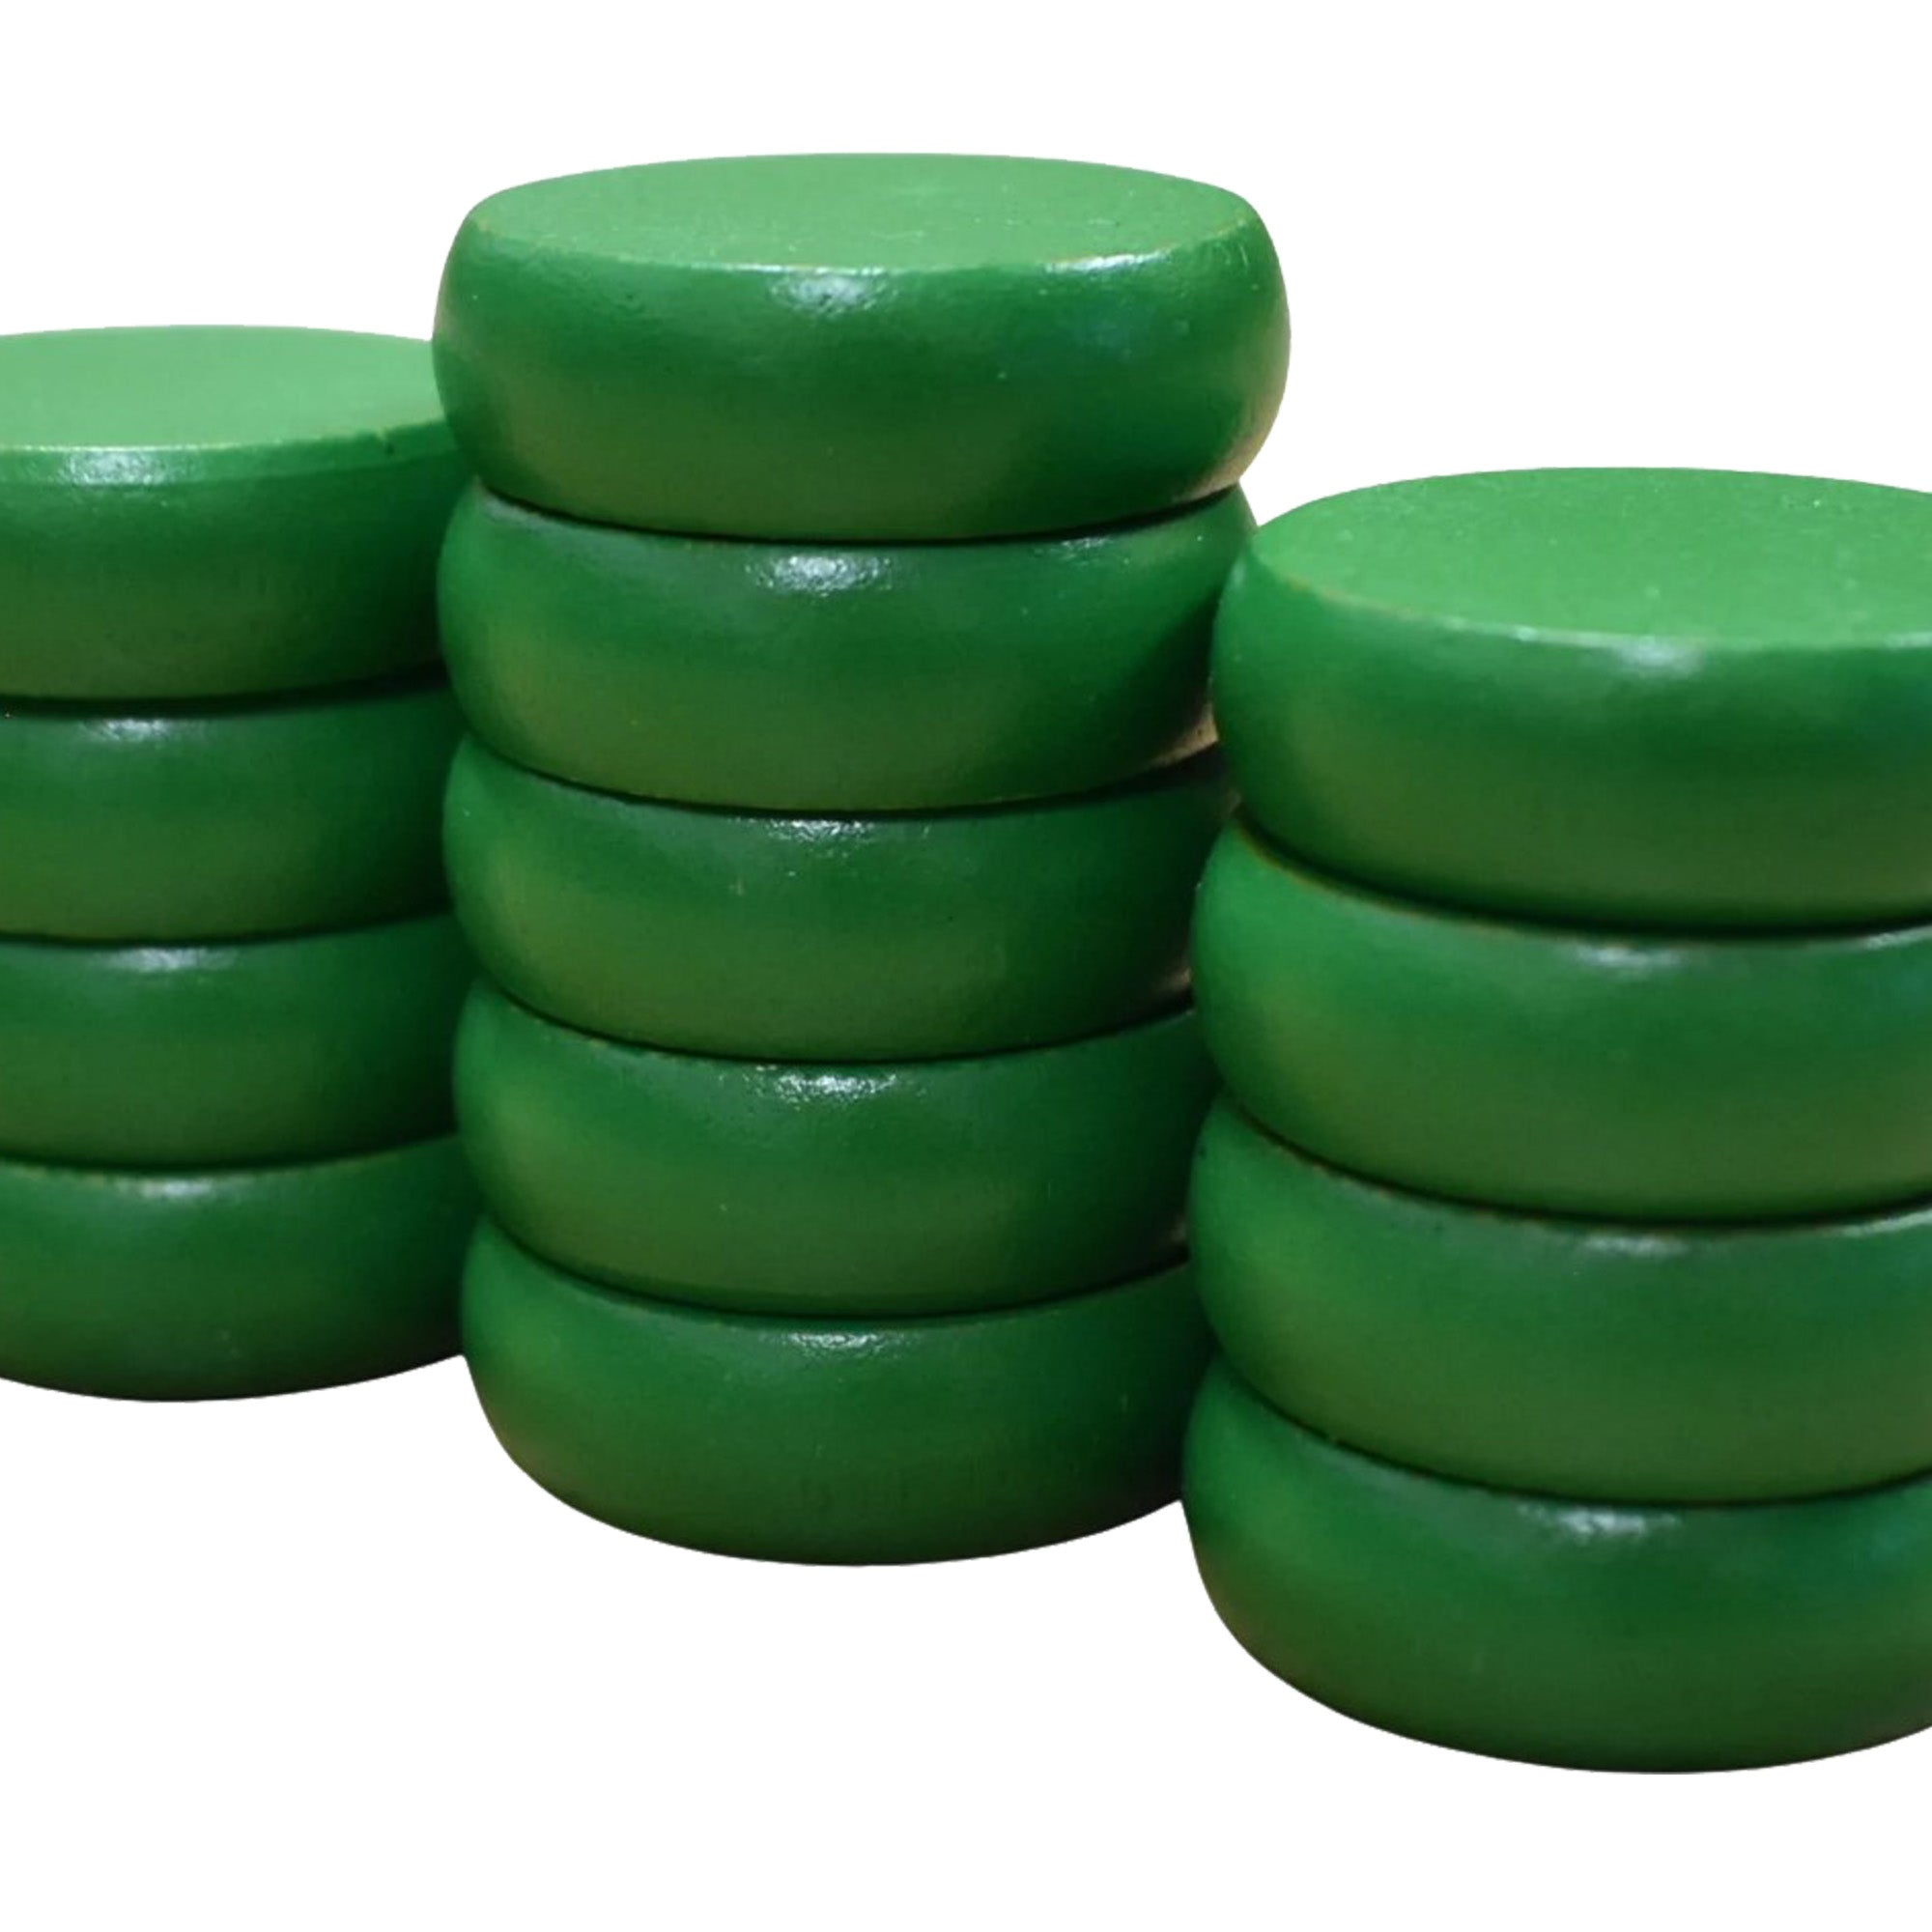 Crokinole Tournament Discs - Set of 13 Green Discs - Official Size 1-1/4" - Includes Bag - Carrom Alternative